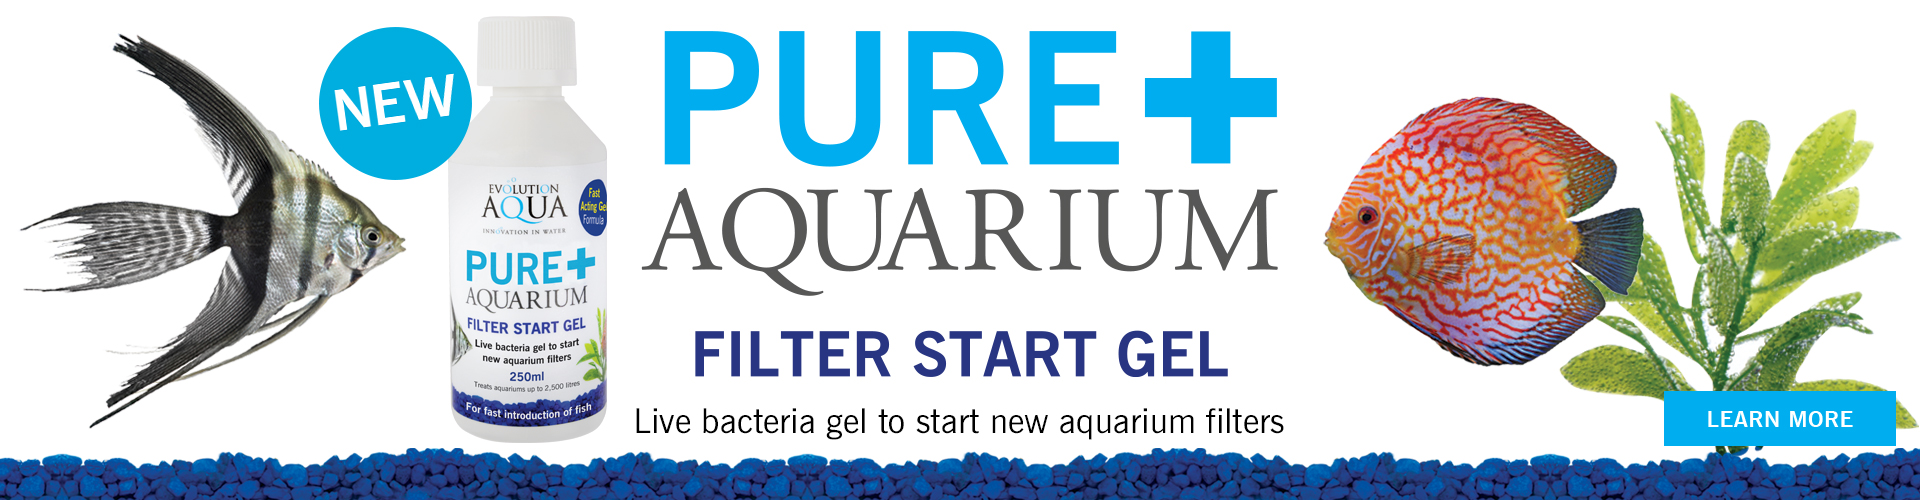 PURE+Aquarium-FilterStartGel